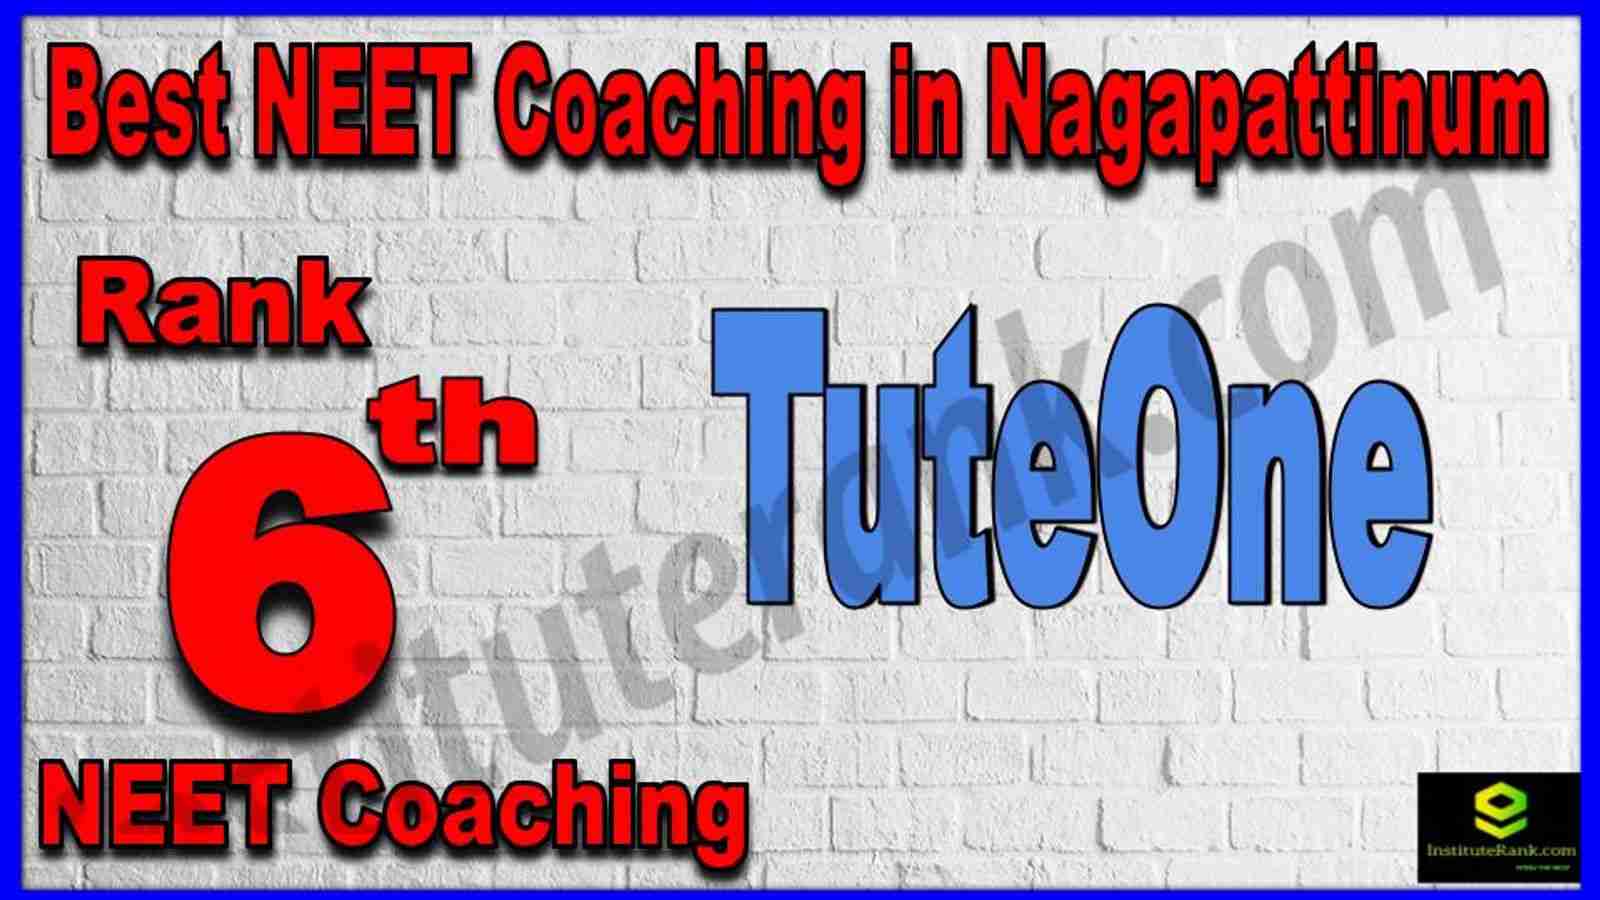 Rank 6th Best NEET Coaching in Nagapattinam